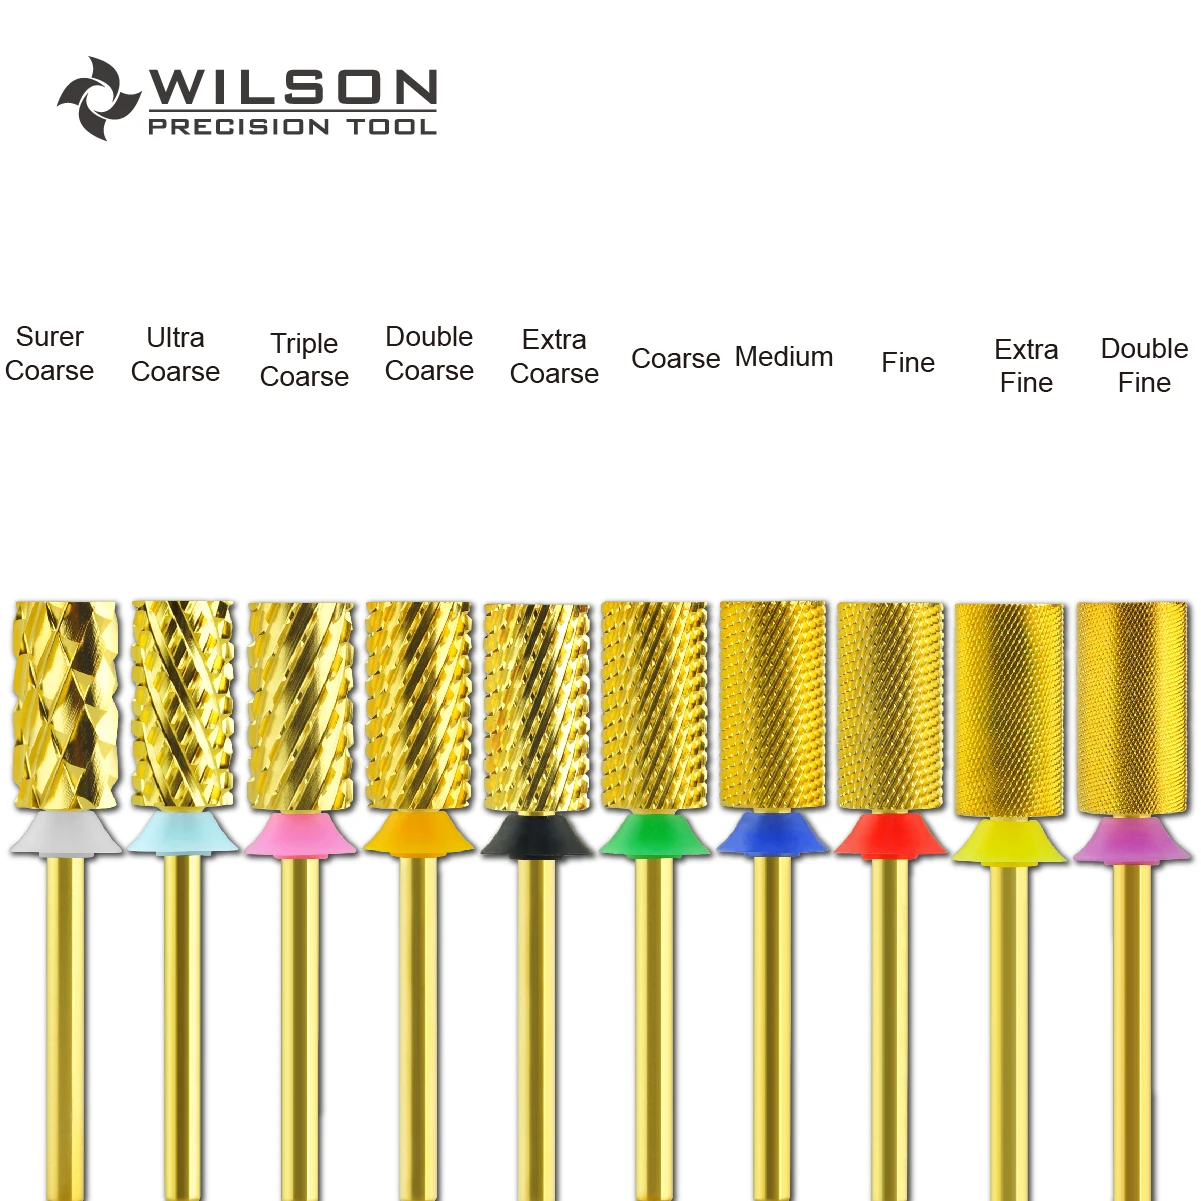 Large Barrel - Gold/Silver - WILSON Tungsten Carbide Nail Drill Bit Electric Manicure Drill & Accessory